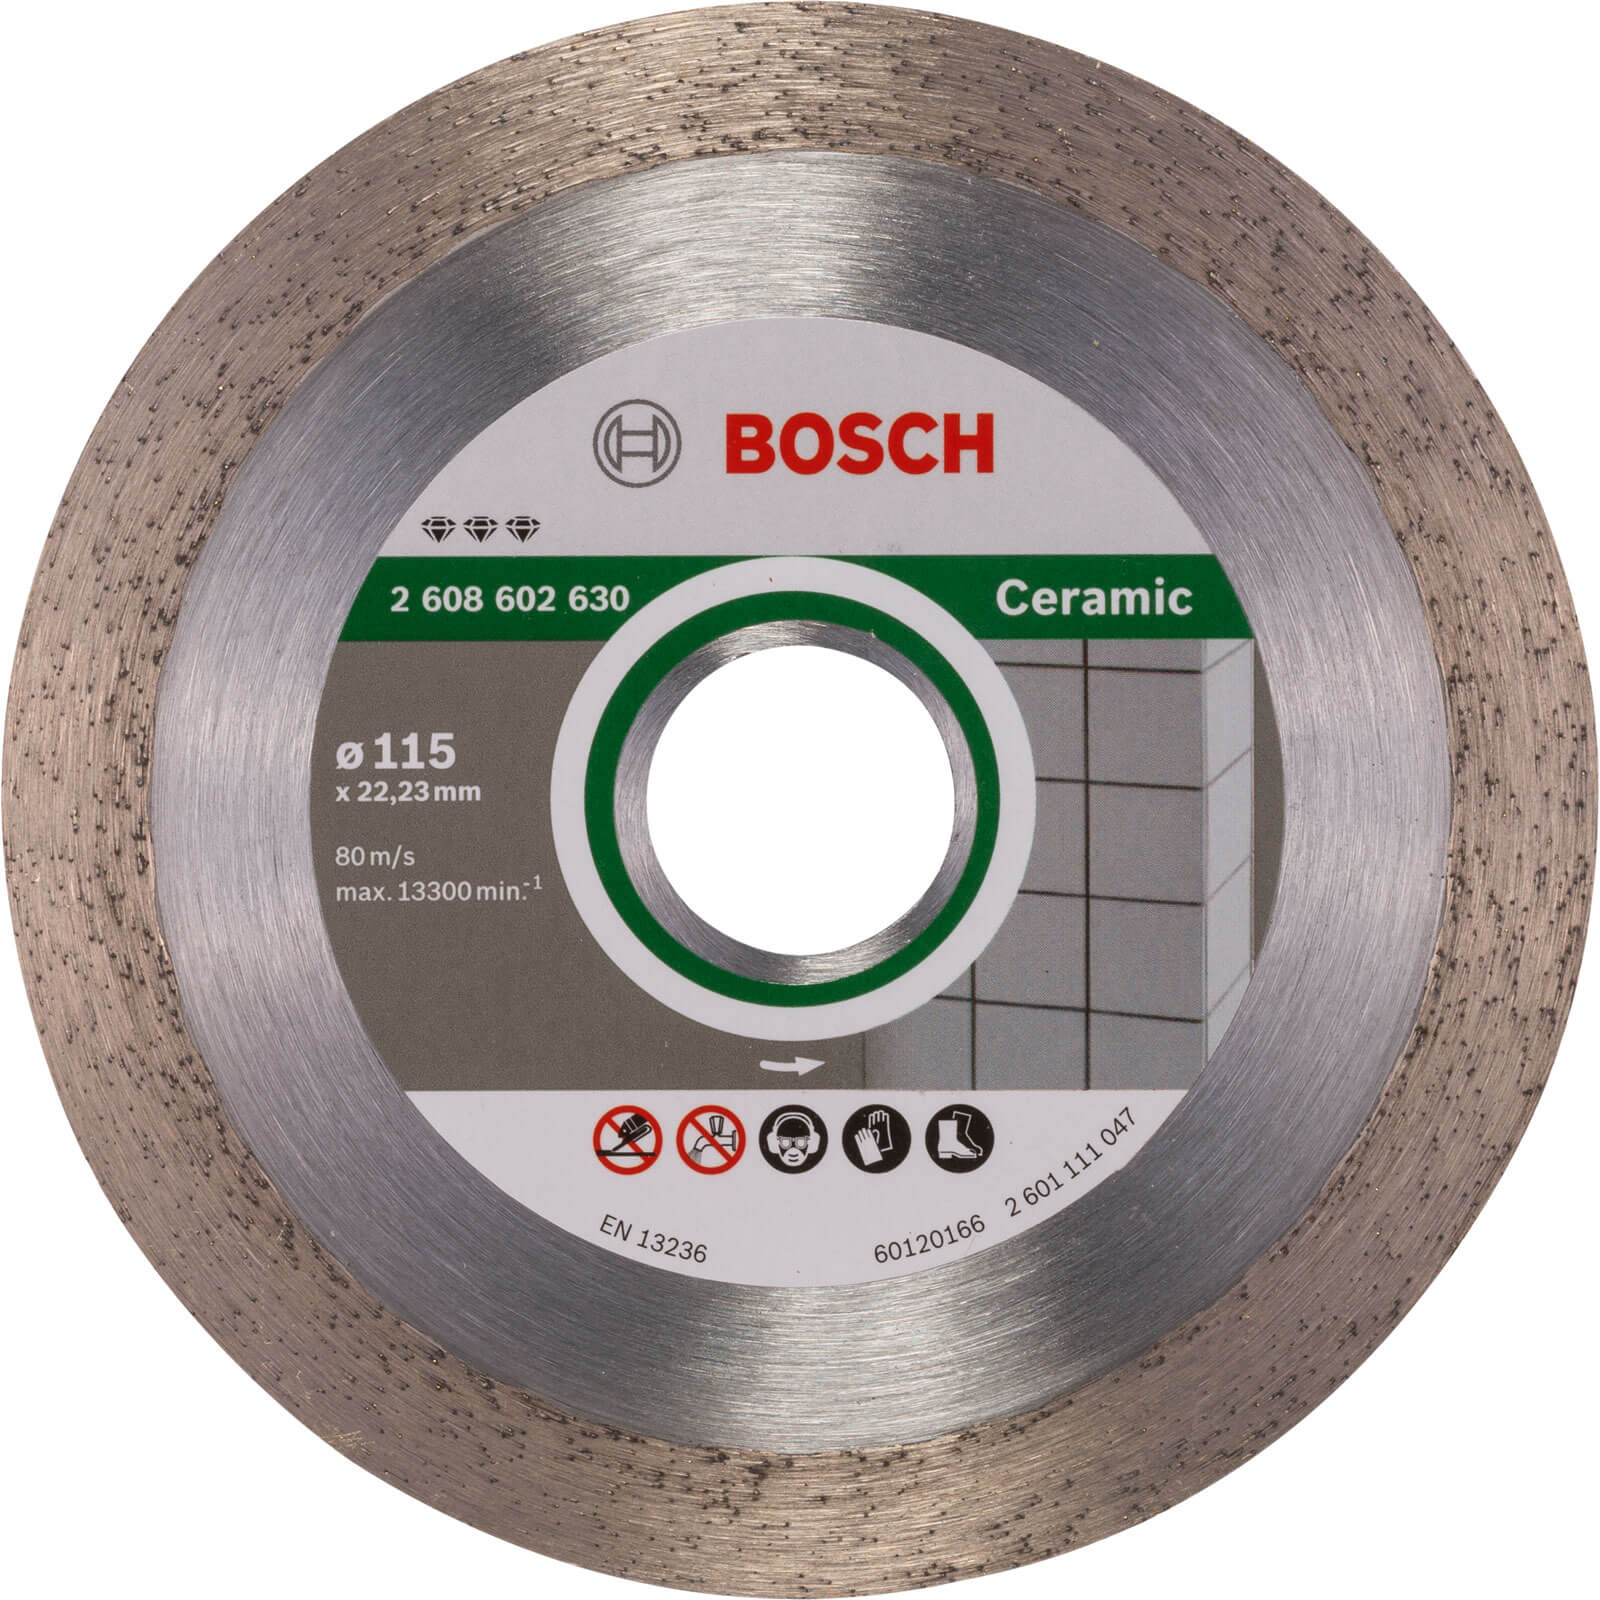 Photo of Bosch Best Ceramic Diamond Cutting Disc 115mm